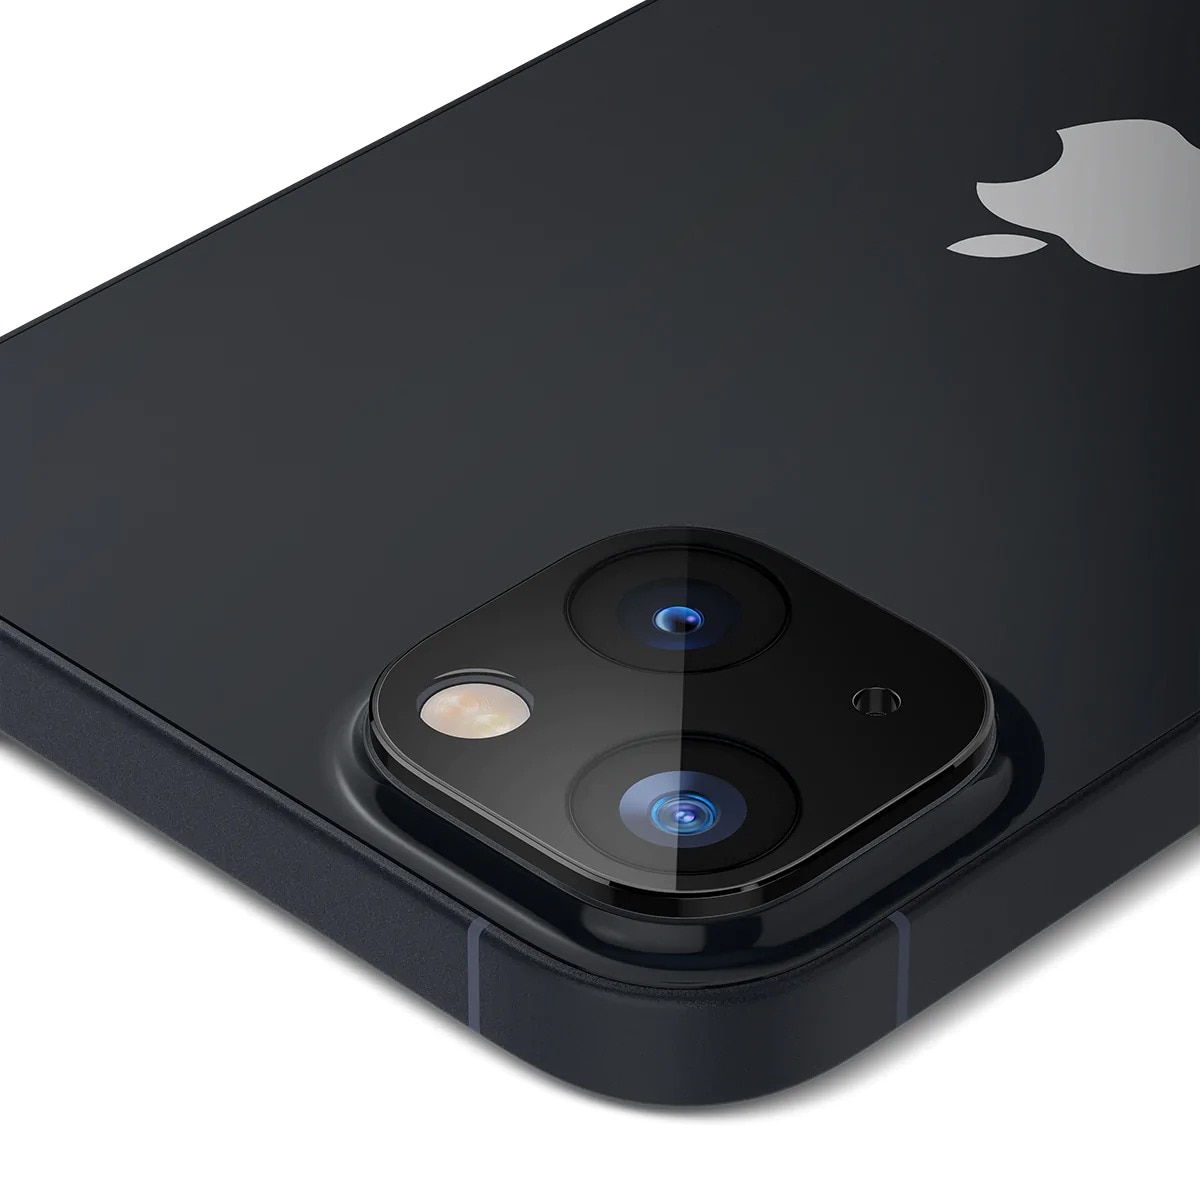 Optik Lens Protector (2-pack) iPhone 14 zwart